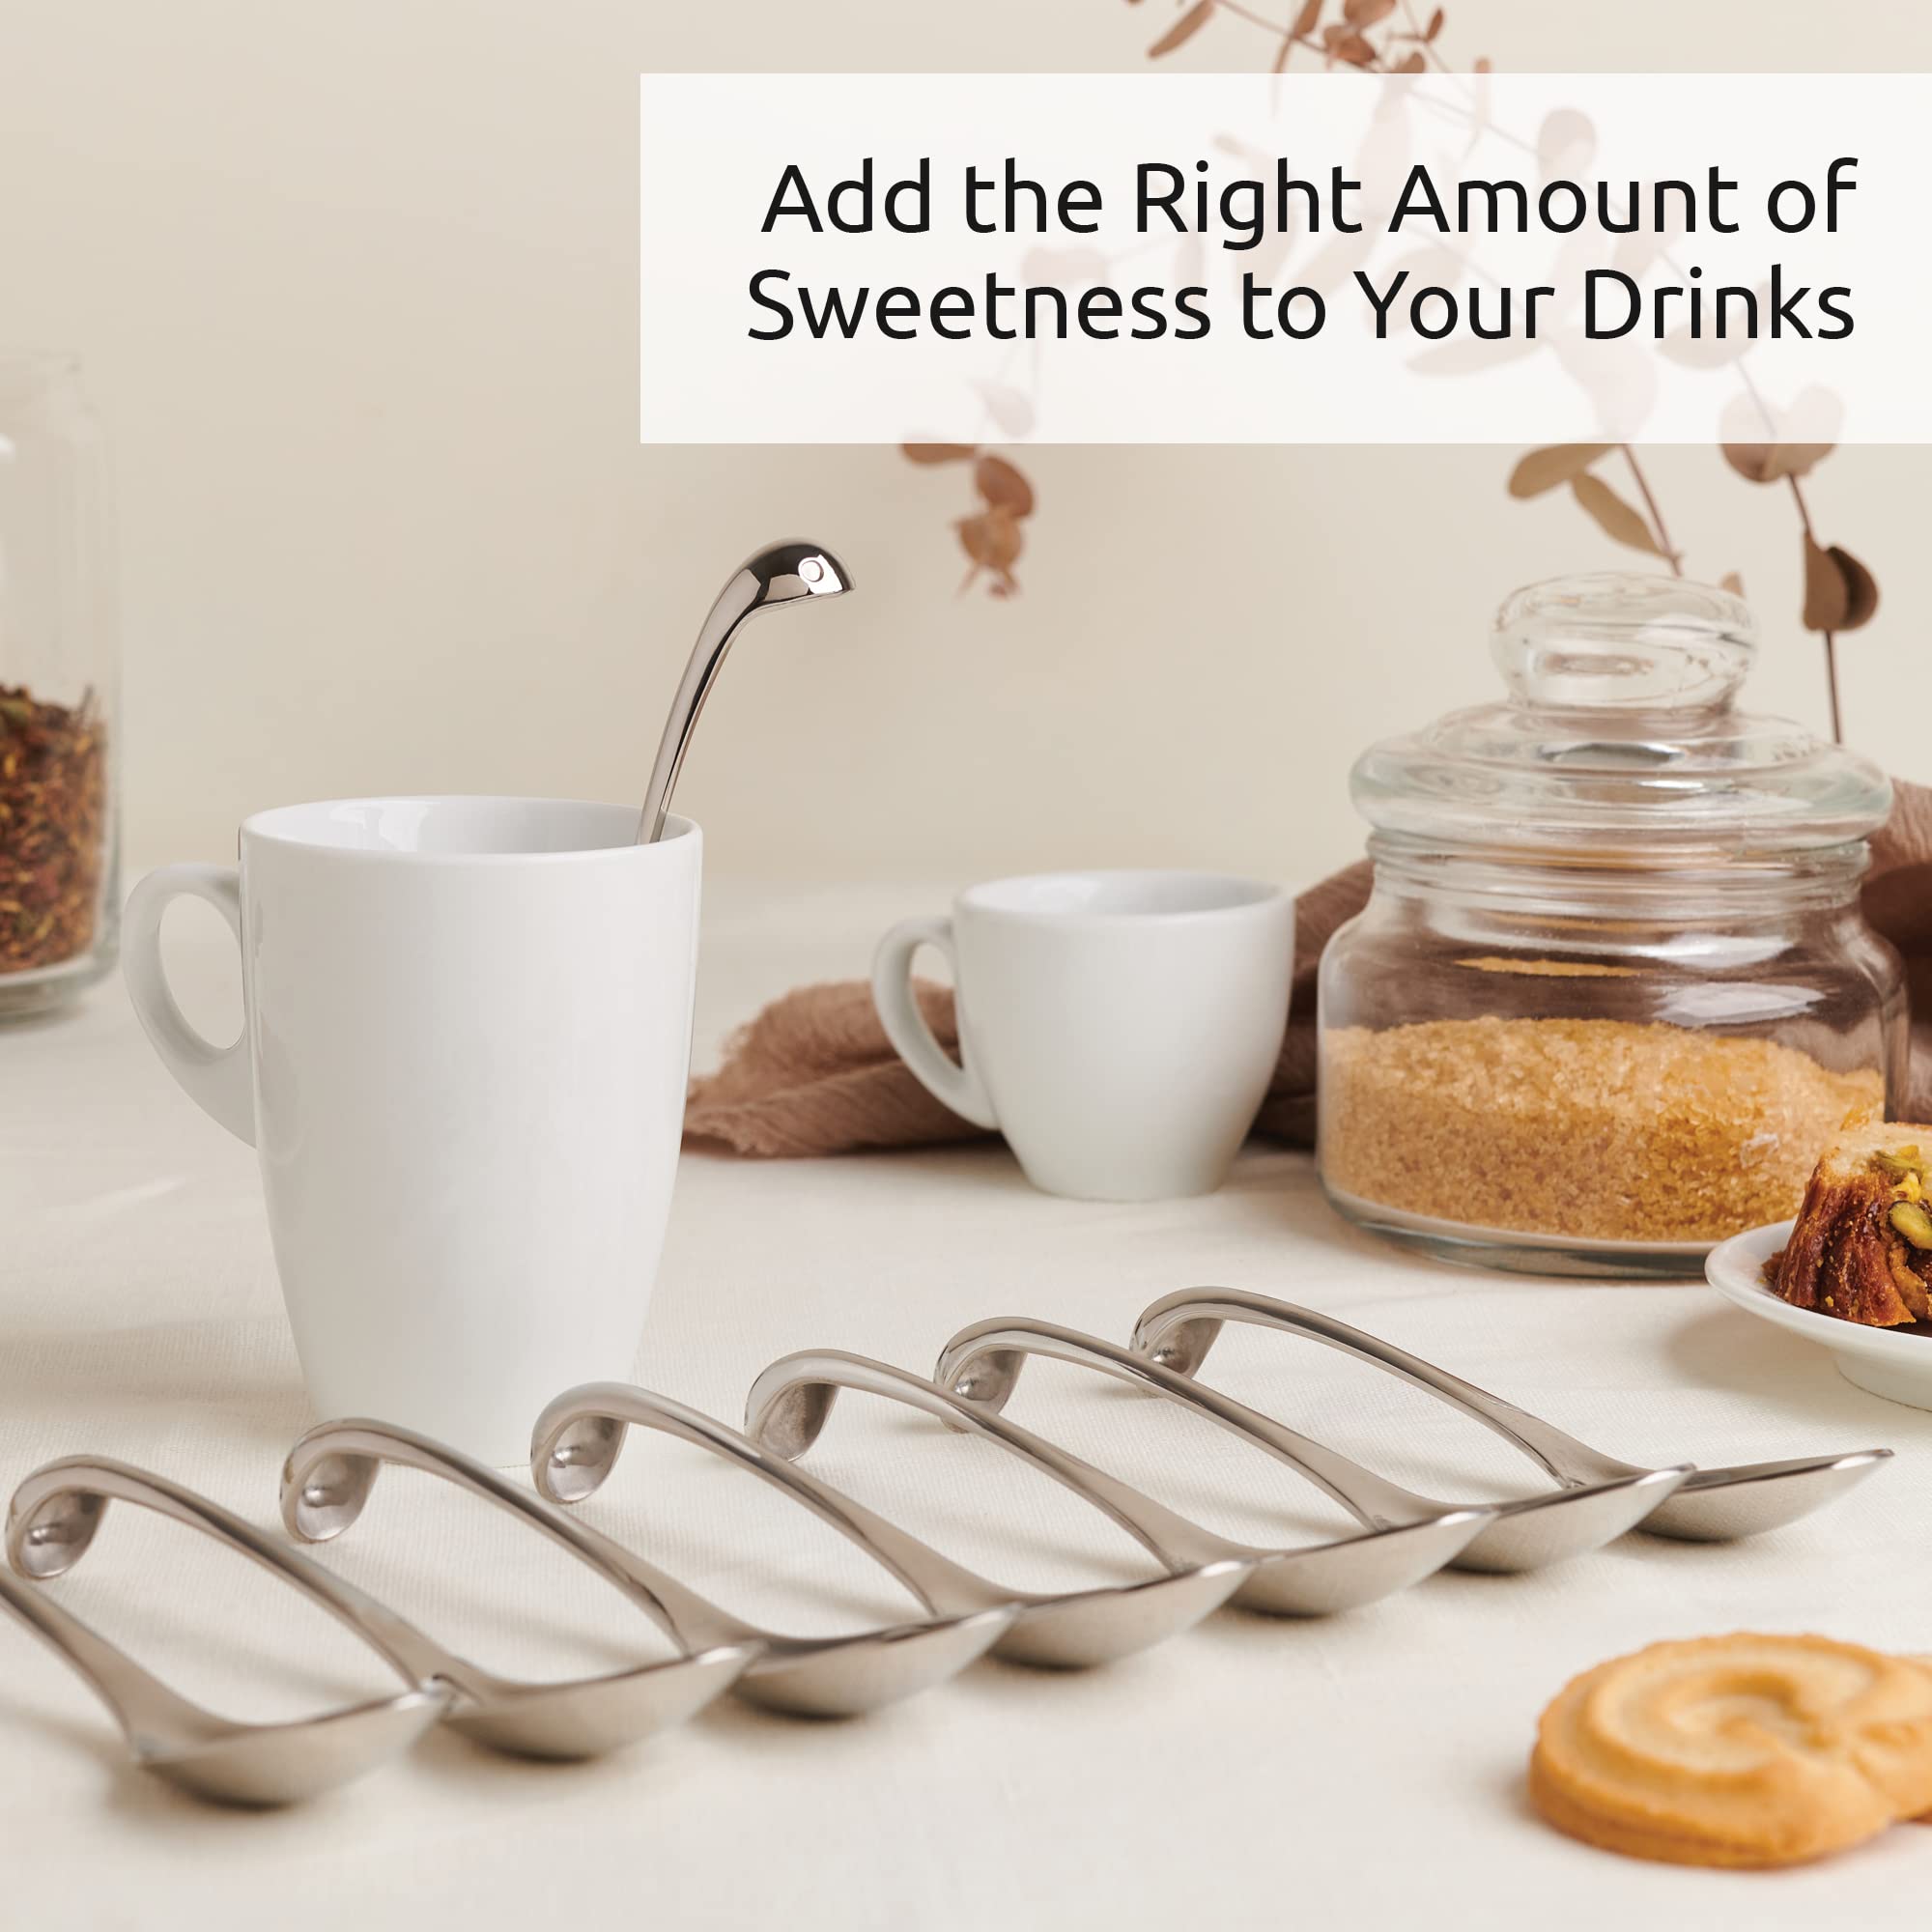 OTOTO Sweet Nessie Sugar Spoon (Set of 8) - Stainless Steel Tea Spoon - 100% Food Grade & Dishwasher Safe - Perfect Spoon for Tea & Coffee